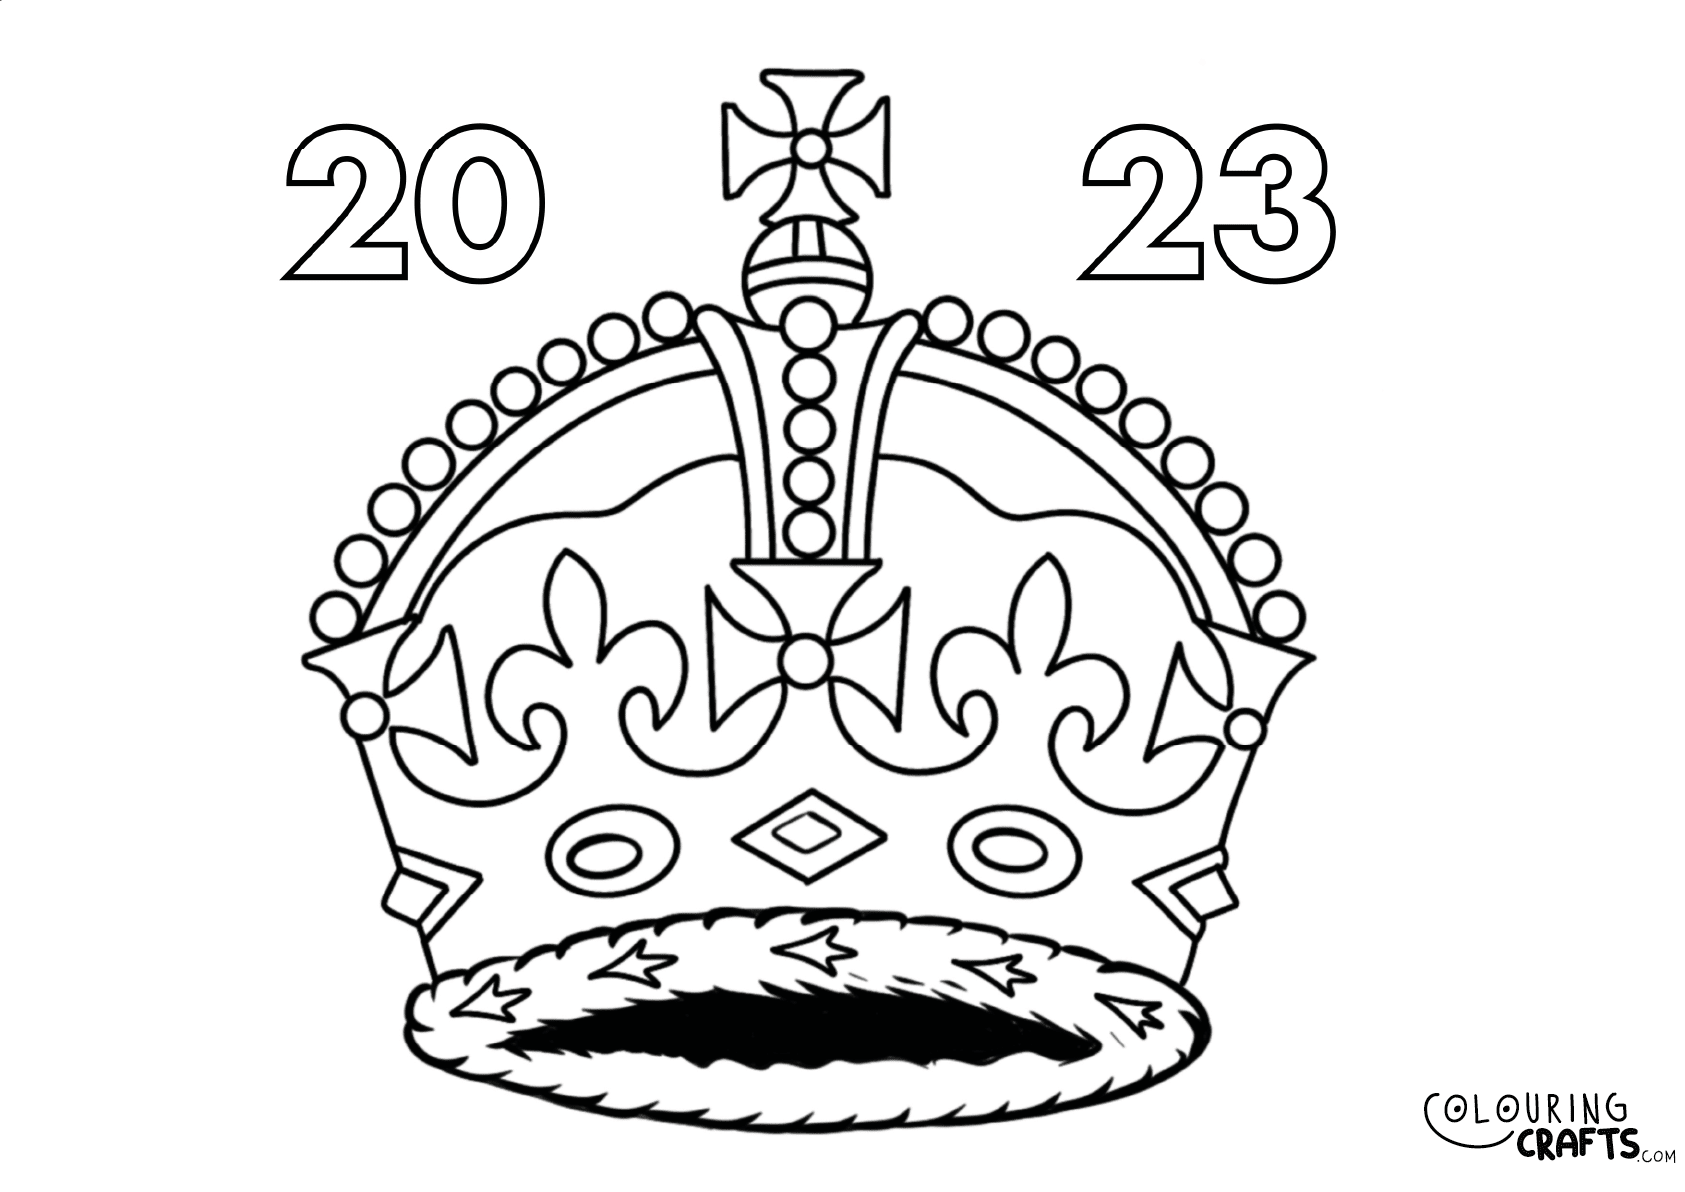 King charles iii crown coronation colouring page